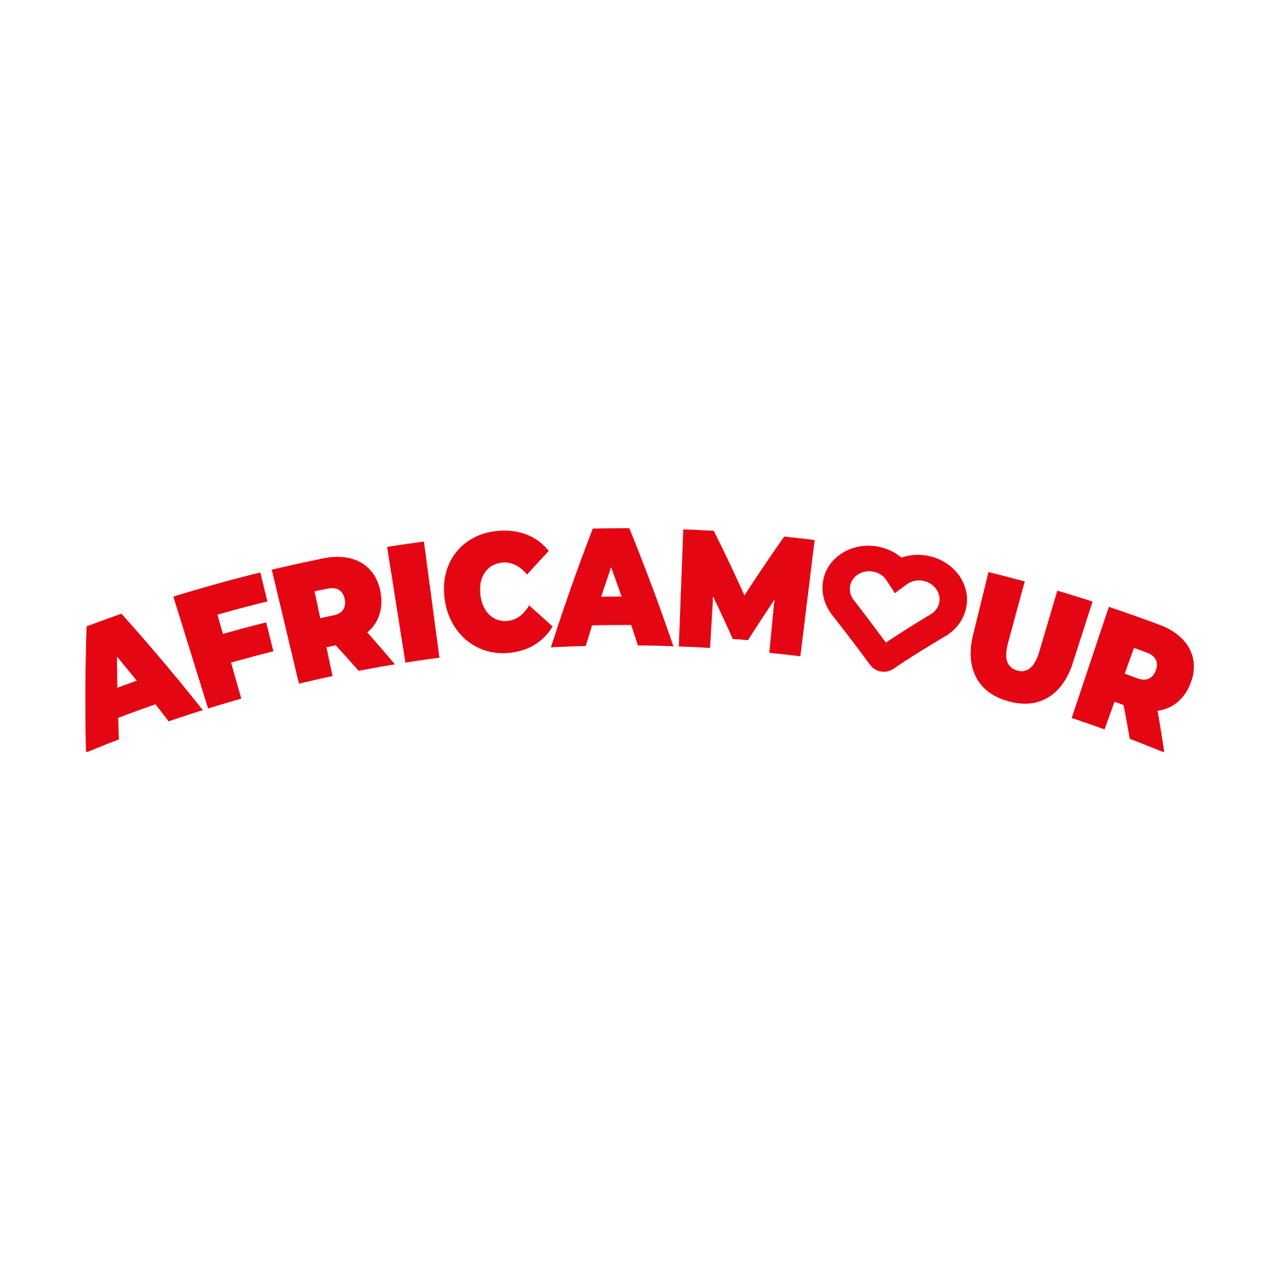 T-SHIRT AFRICAMOUR